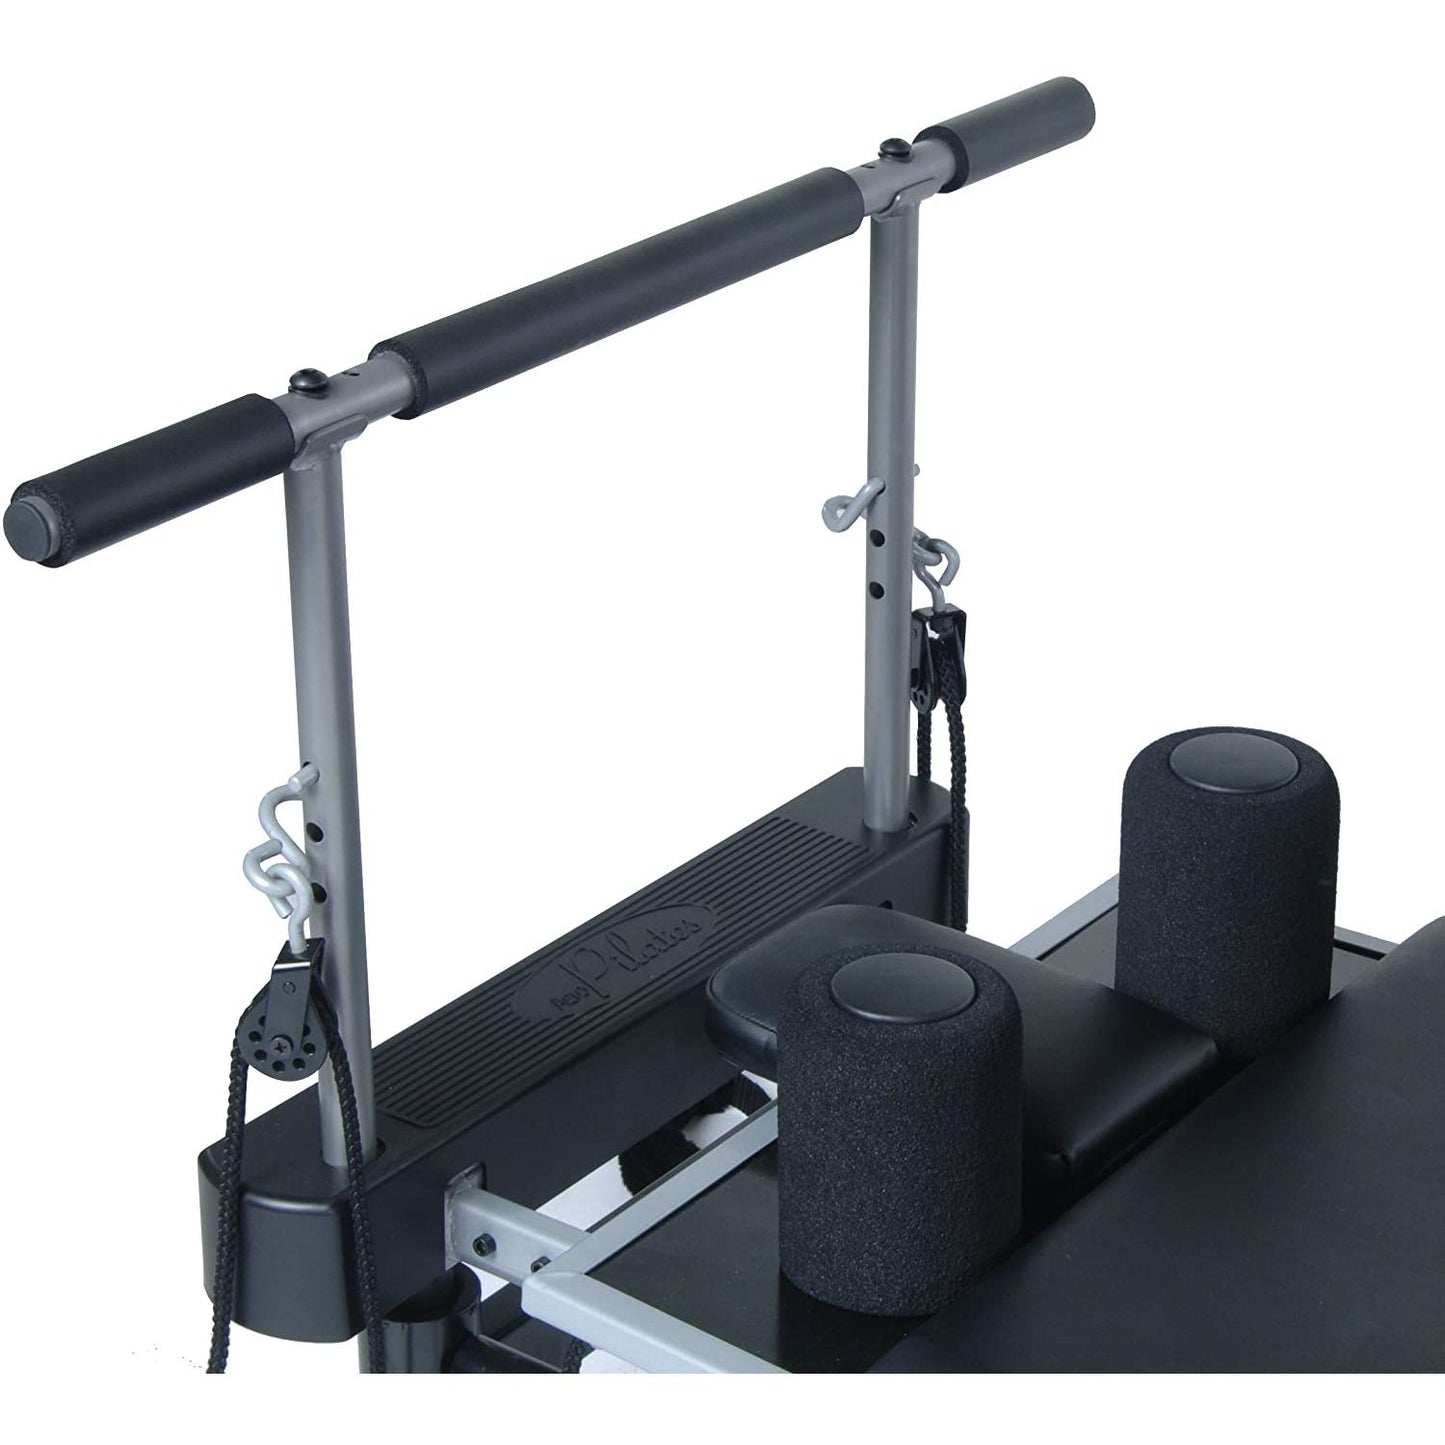 Buy AeroPilates Pilates Reformer Stand - Black, Fitness accessories